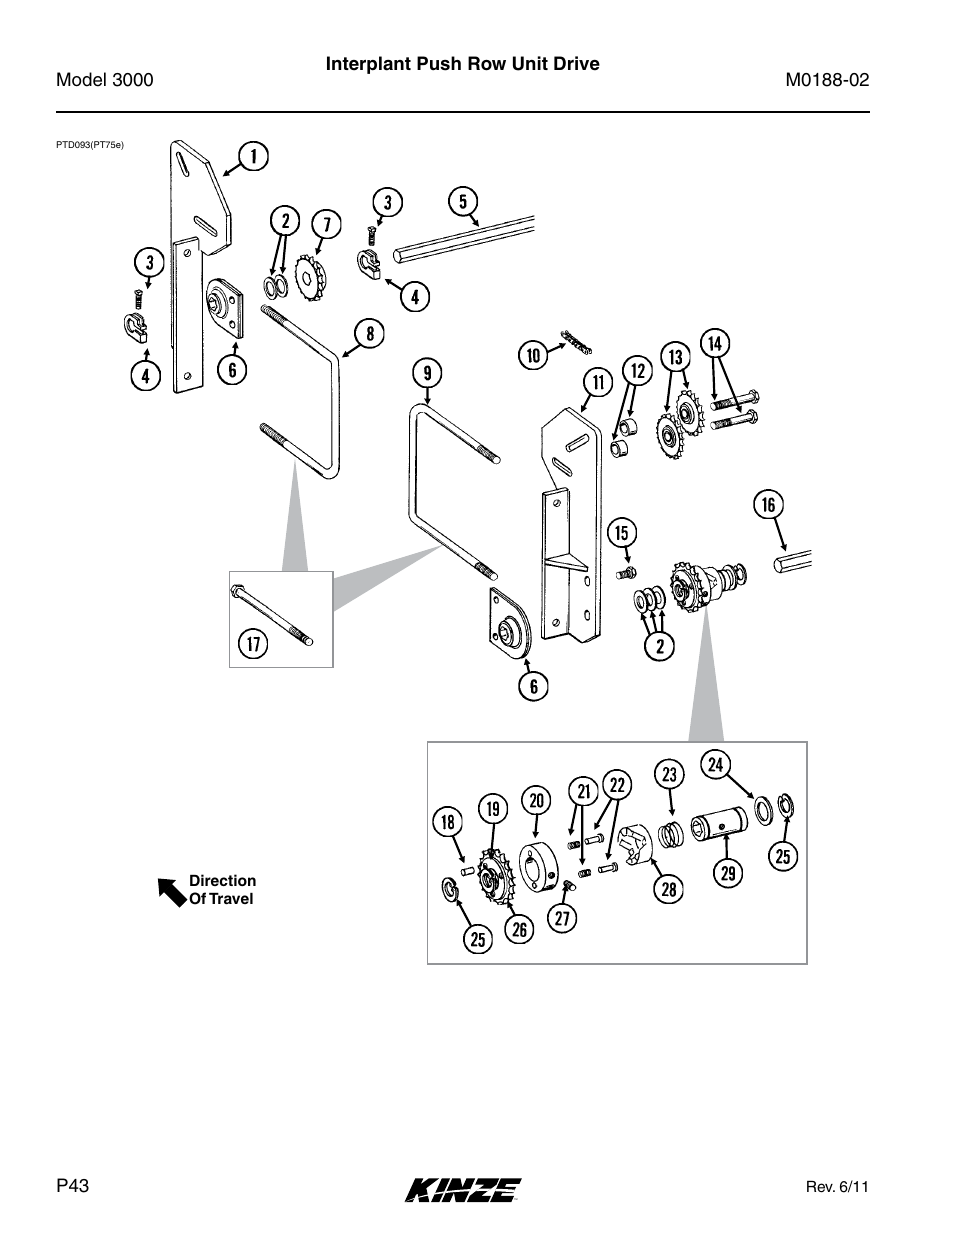 Interplant push row unit drive | Kinze 3000 Rigid Frame Planter Rev. 5/14 User Manual | Page 46 / 154